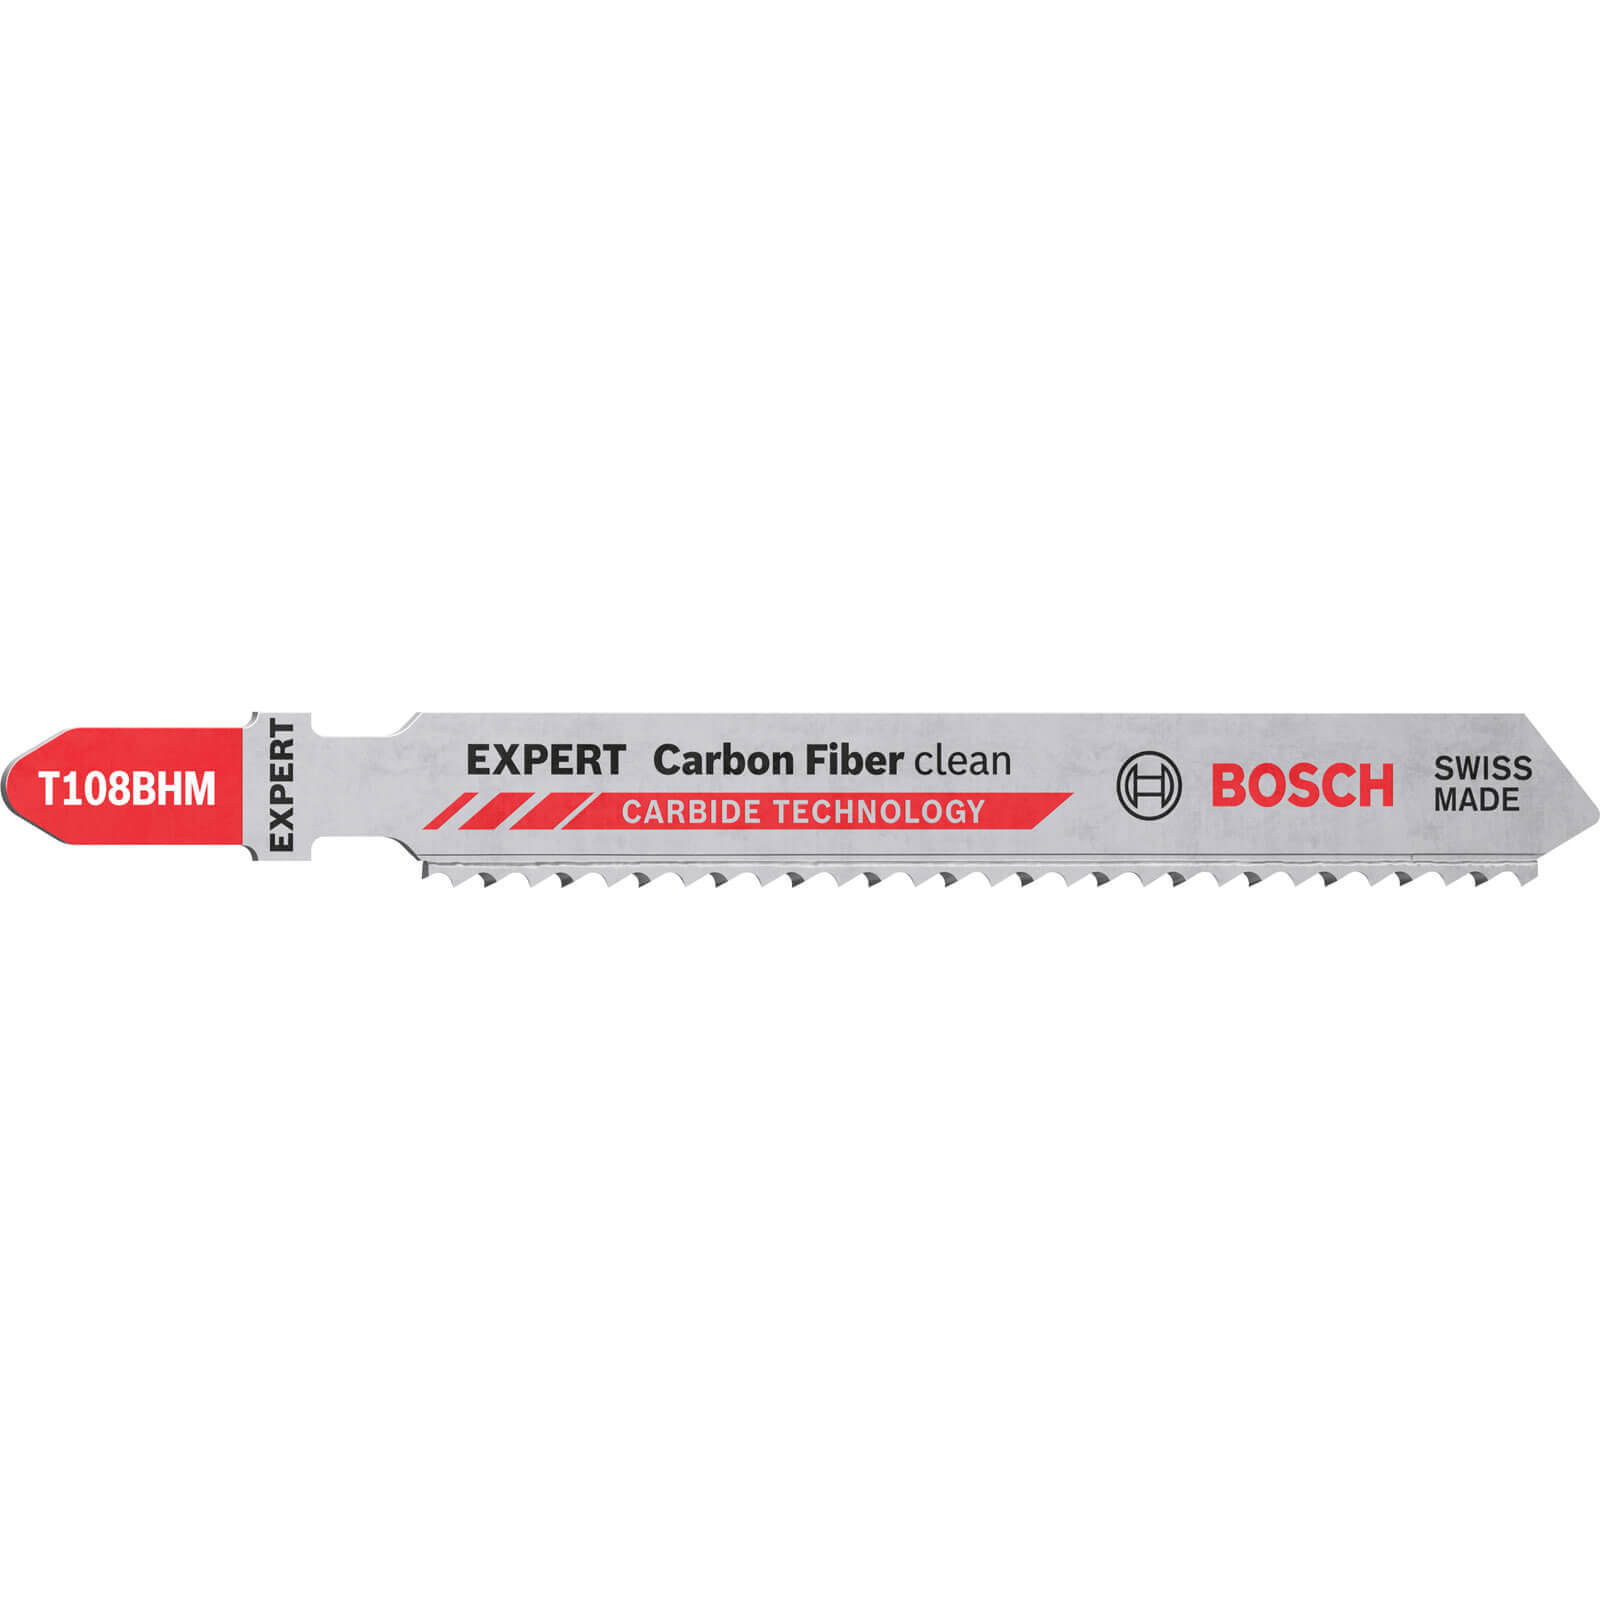 Image of Bosch Expert T108BHM Carbon Fiber Clean Cut Jigsaw Blades Pack of 3